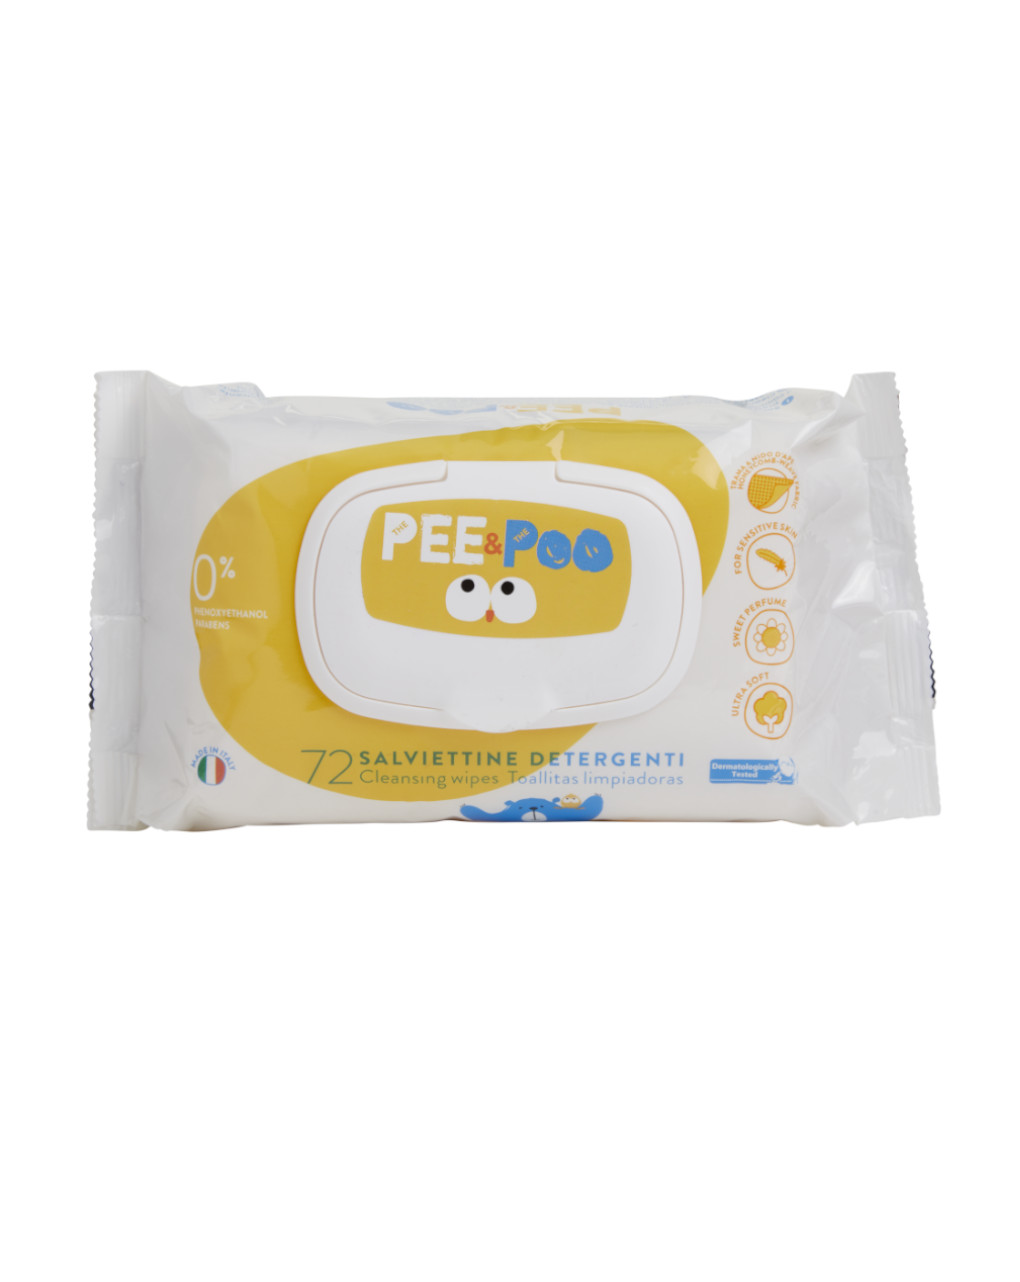 Pee&poo salviettine pop-up detergenti 72 pezzi - 